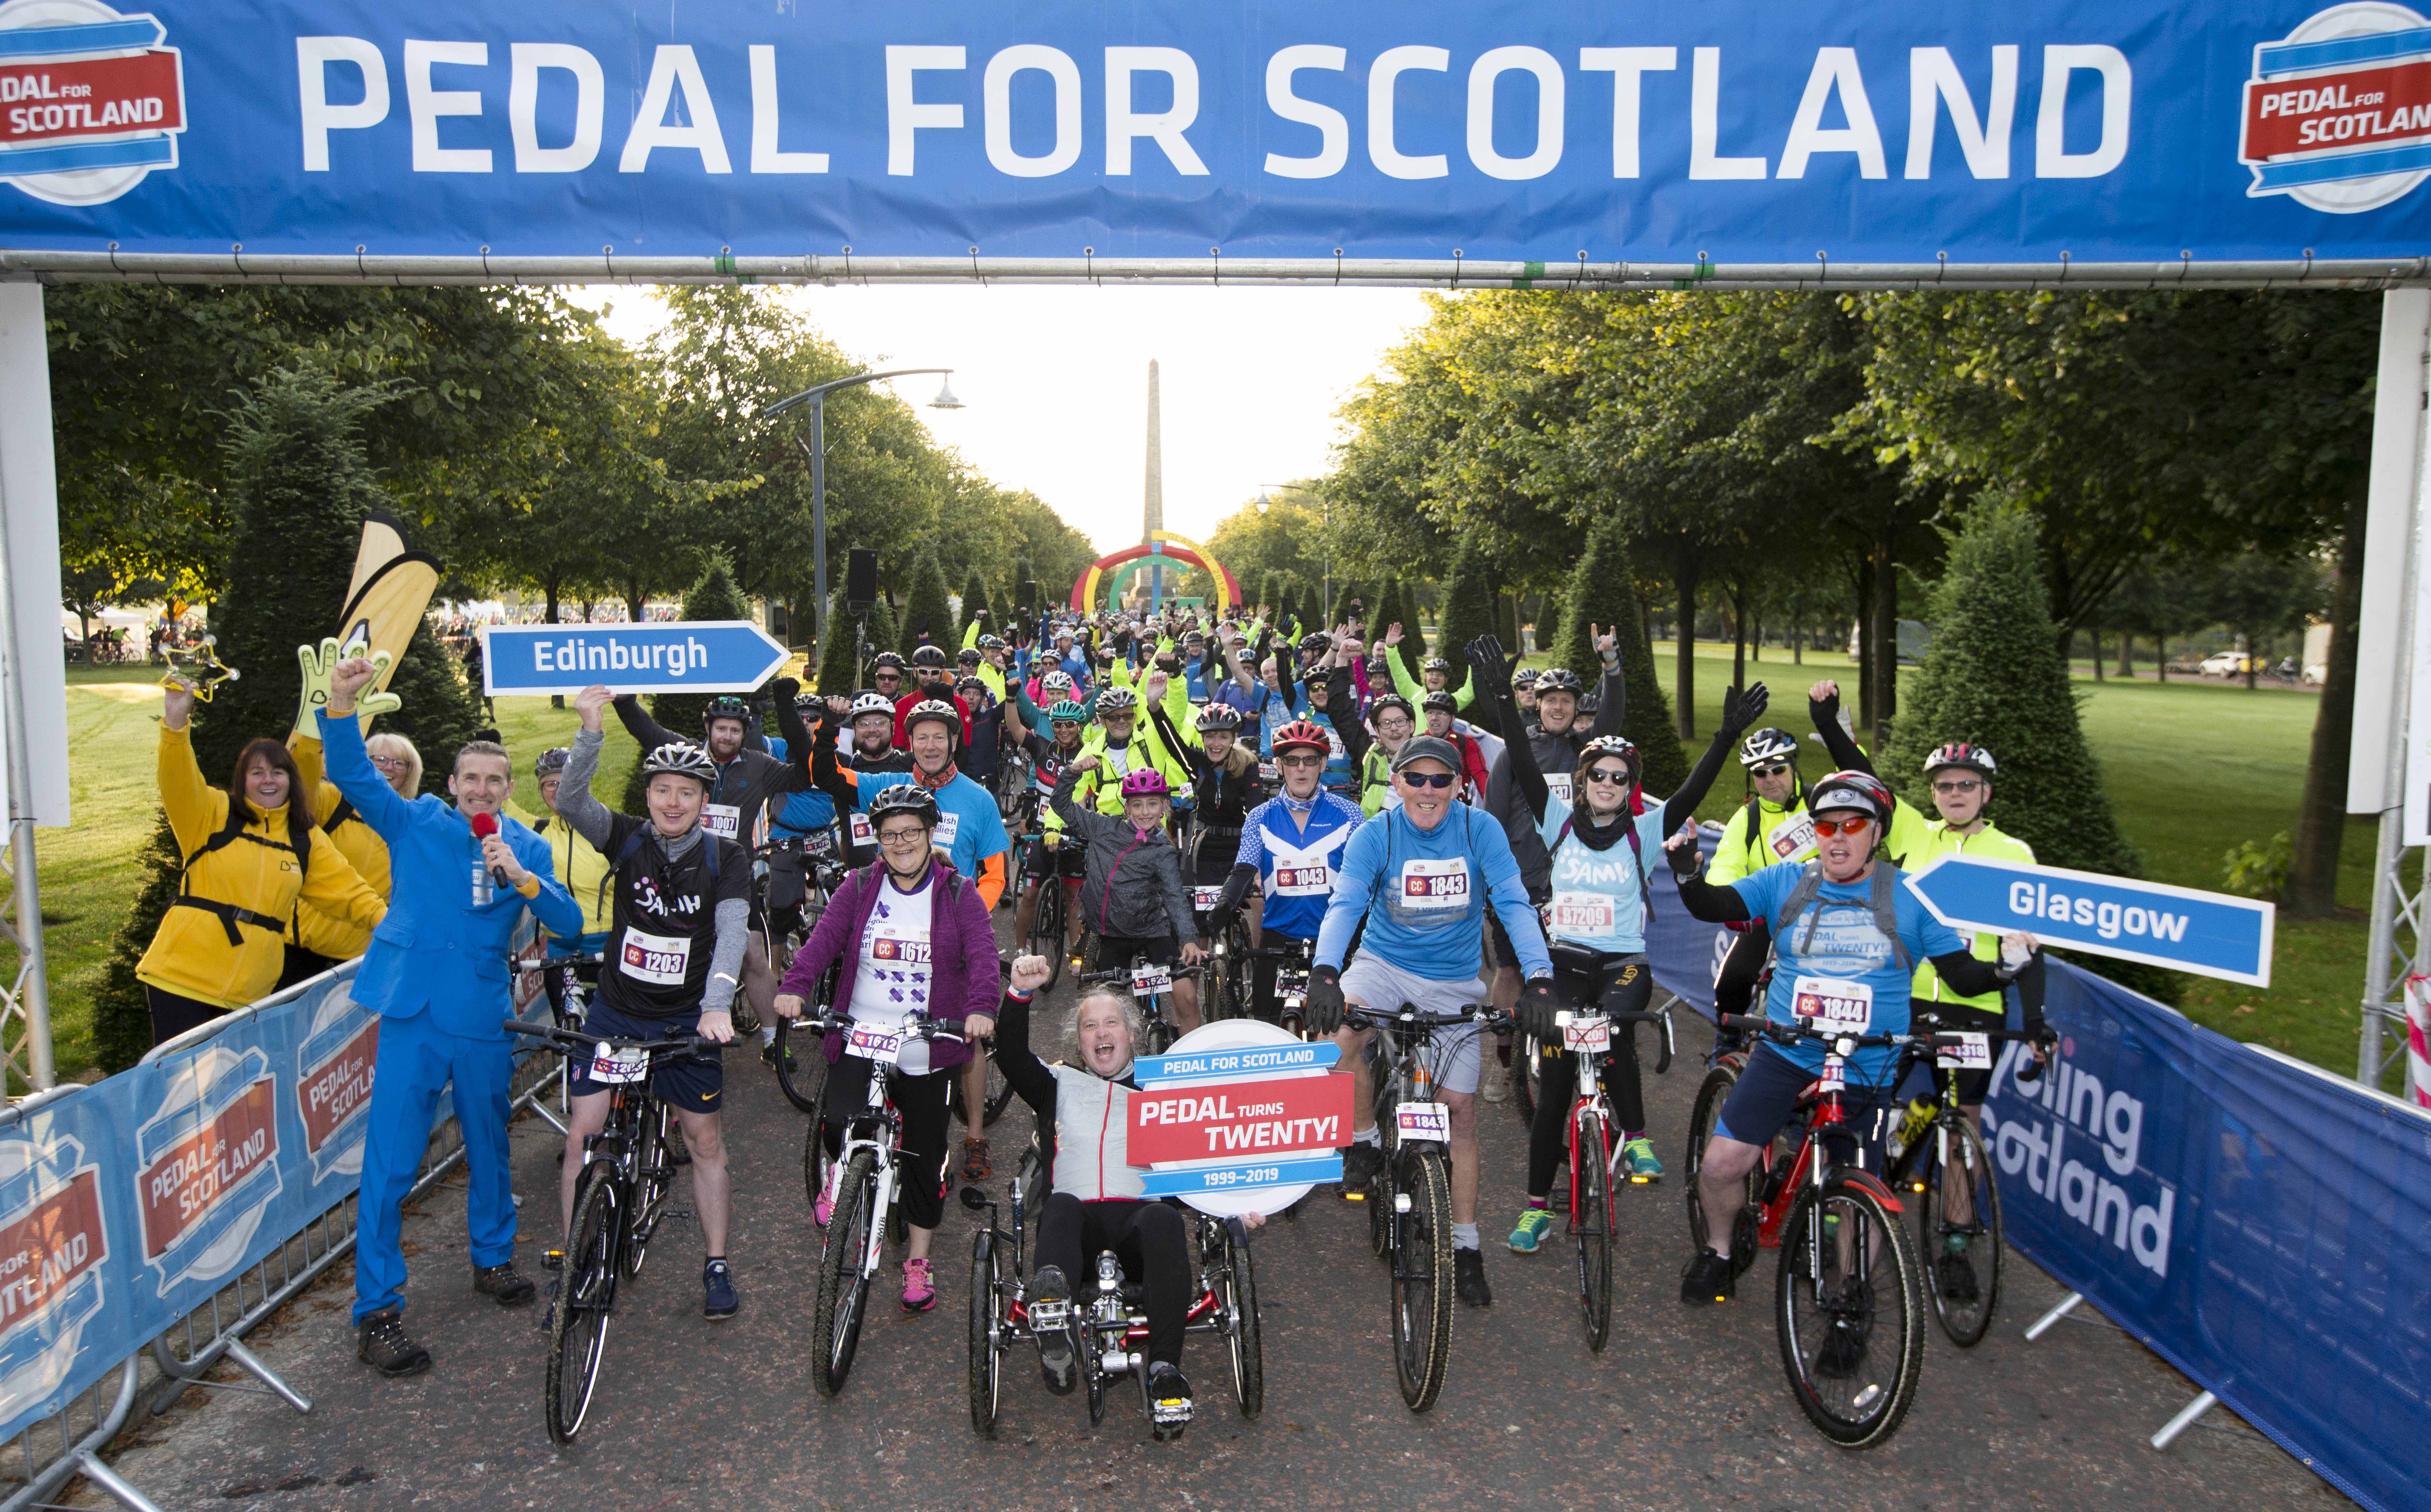 Pedal for Scotland 2019 - 20th anniversary event